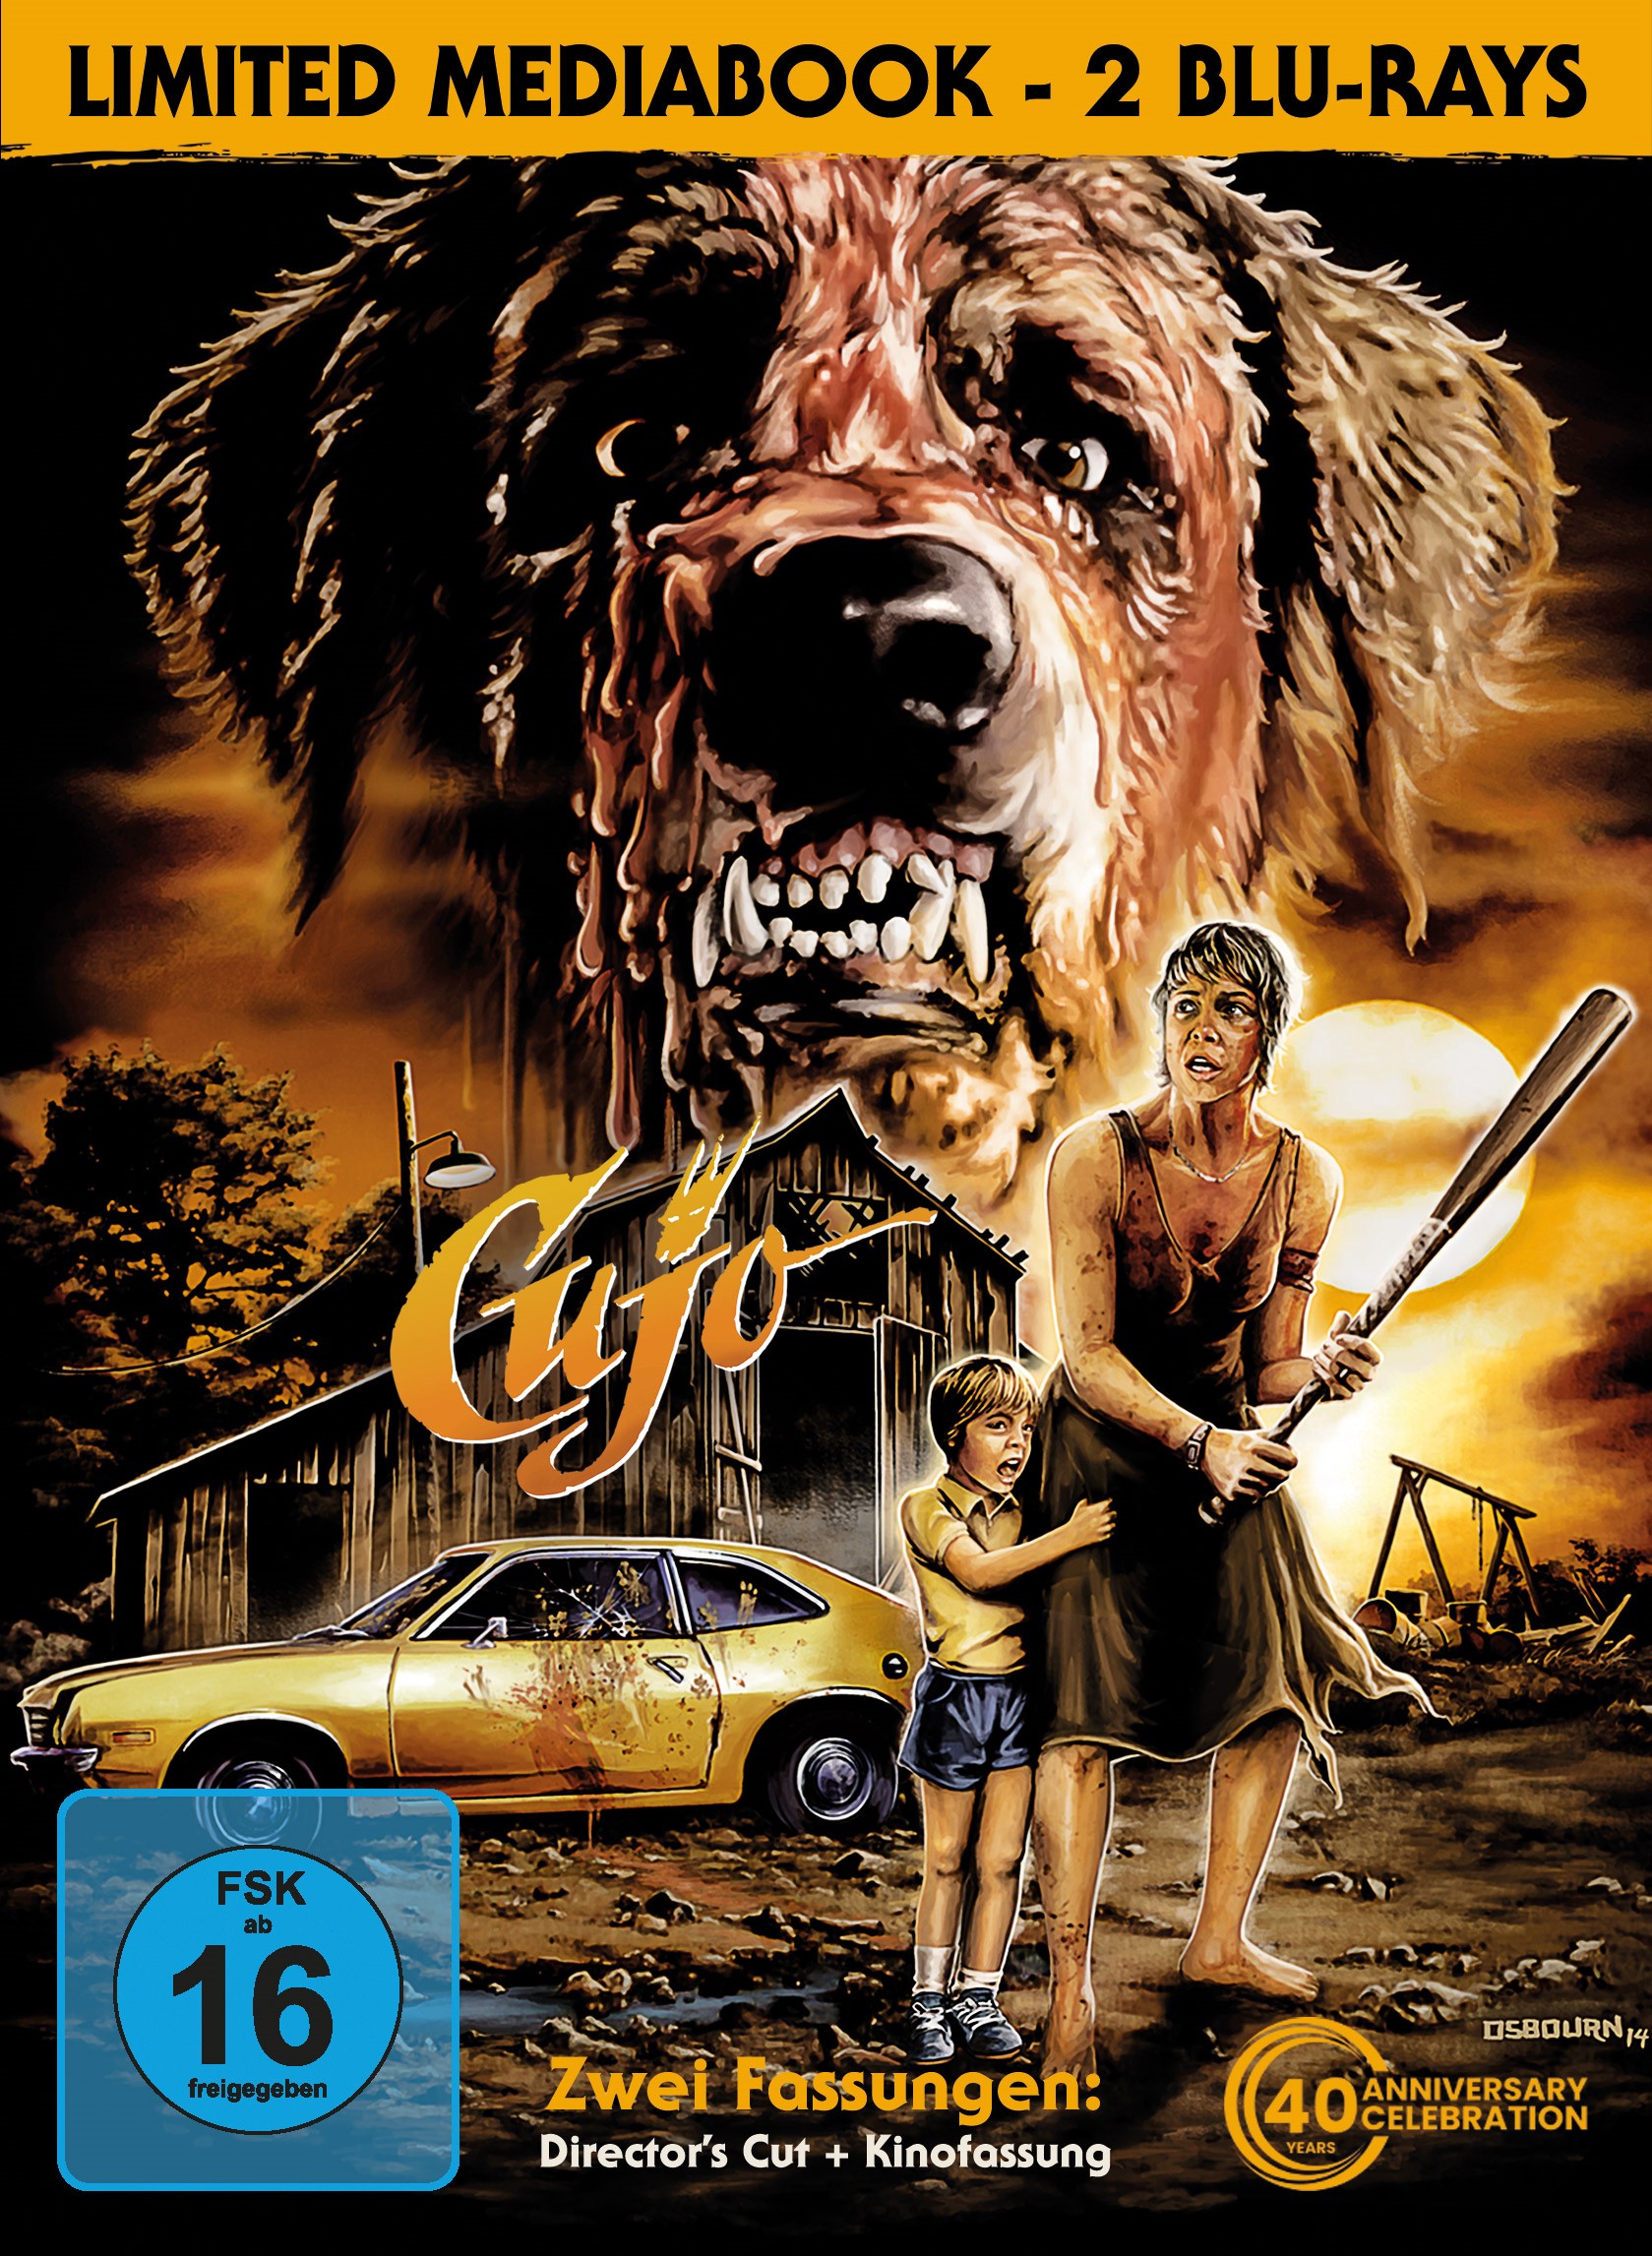 Stephen King's Cujo (Director's Cut + Kinofassung) - Limited Mediabook G